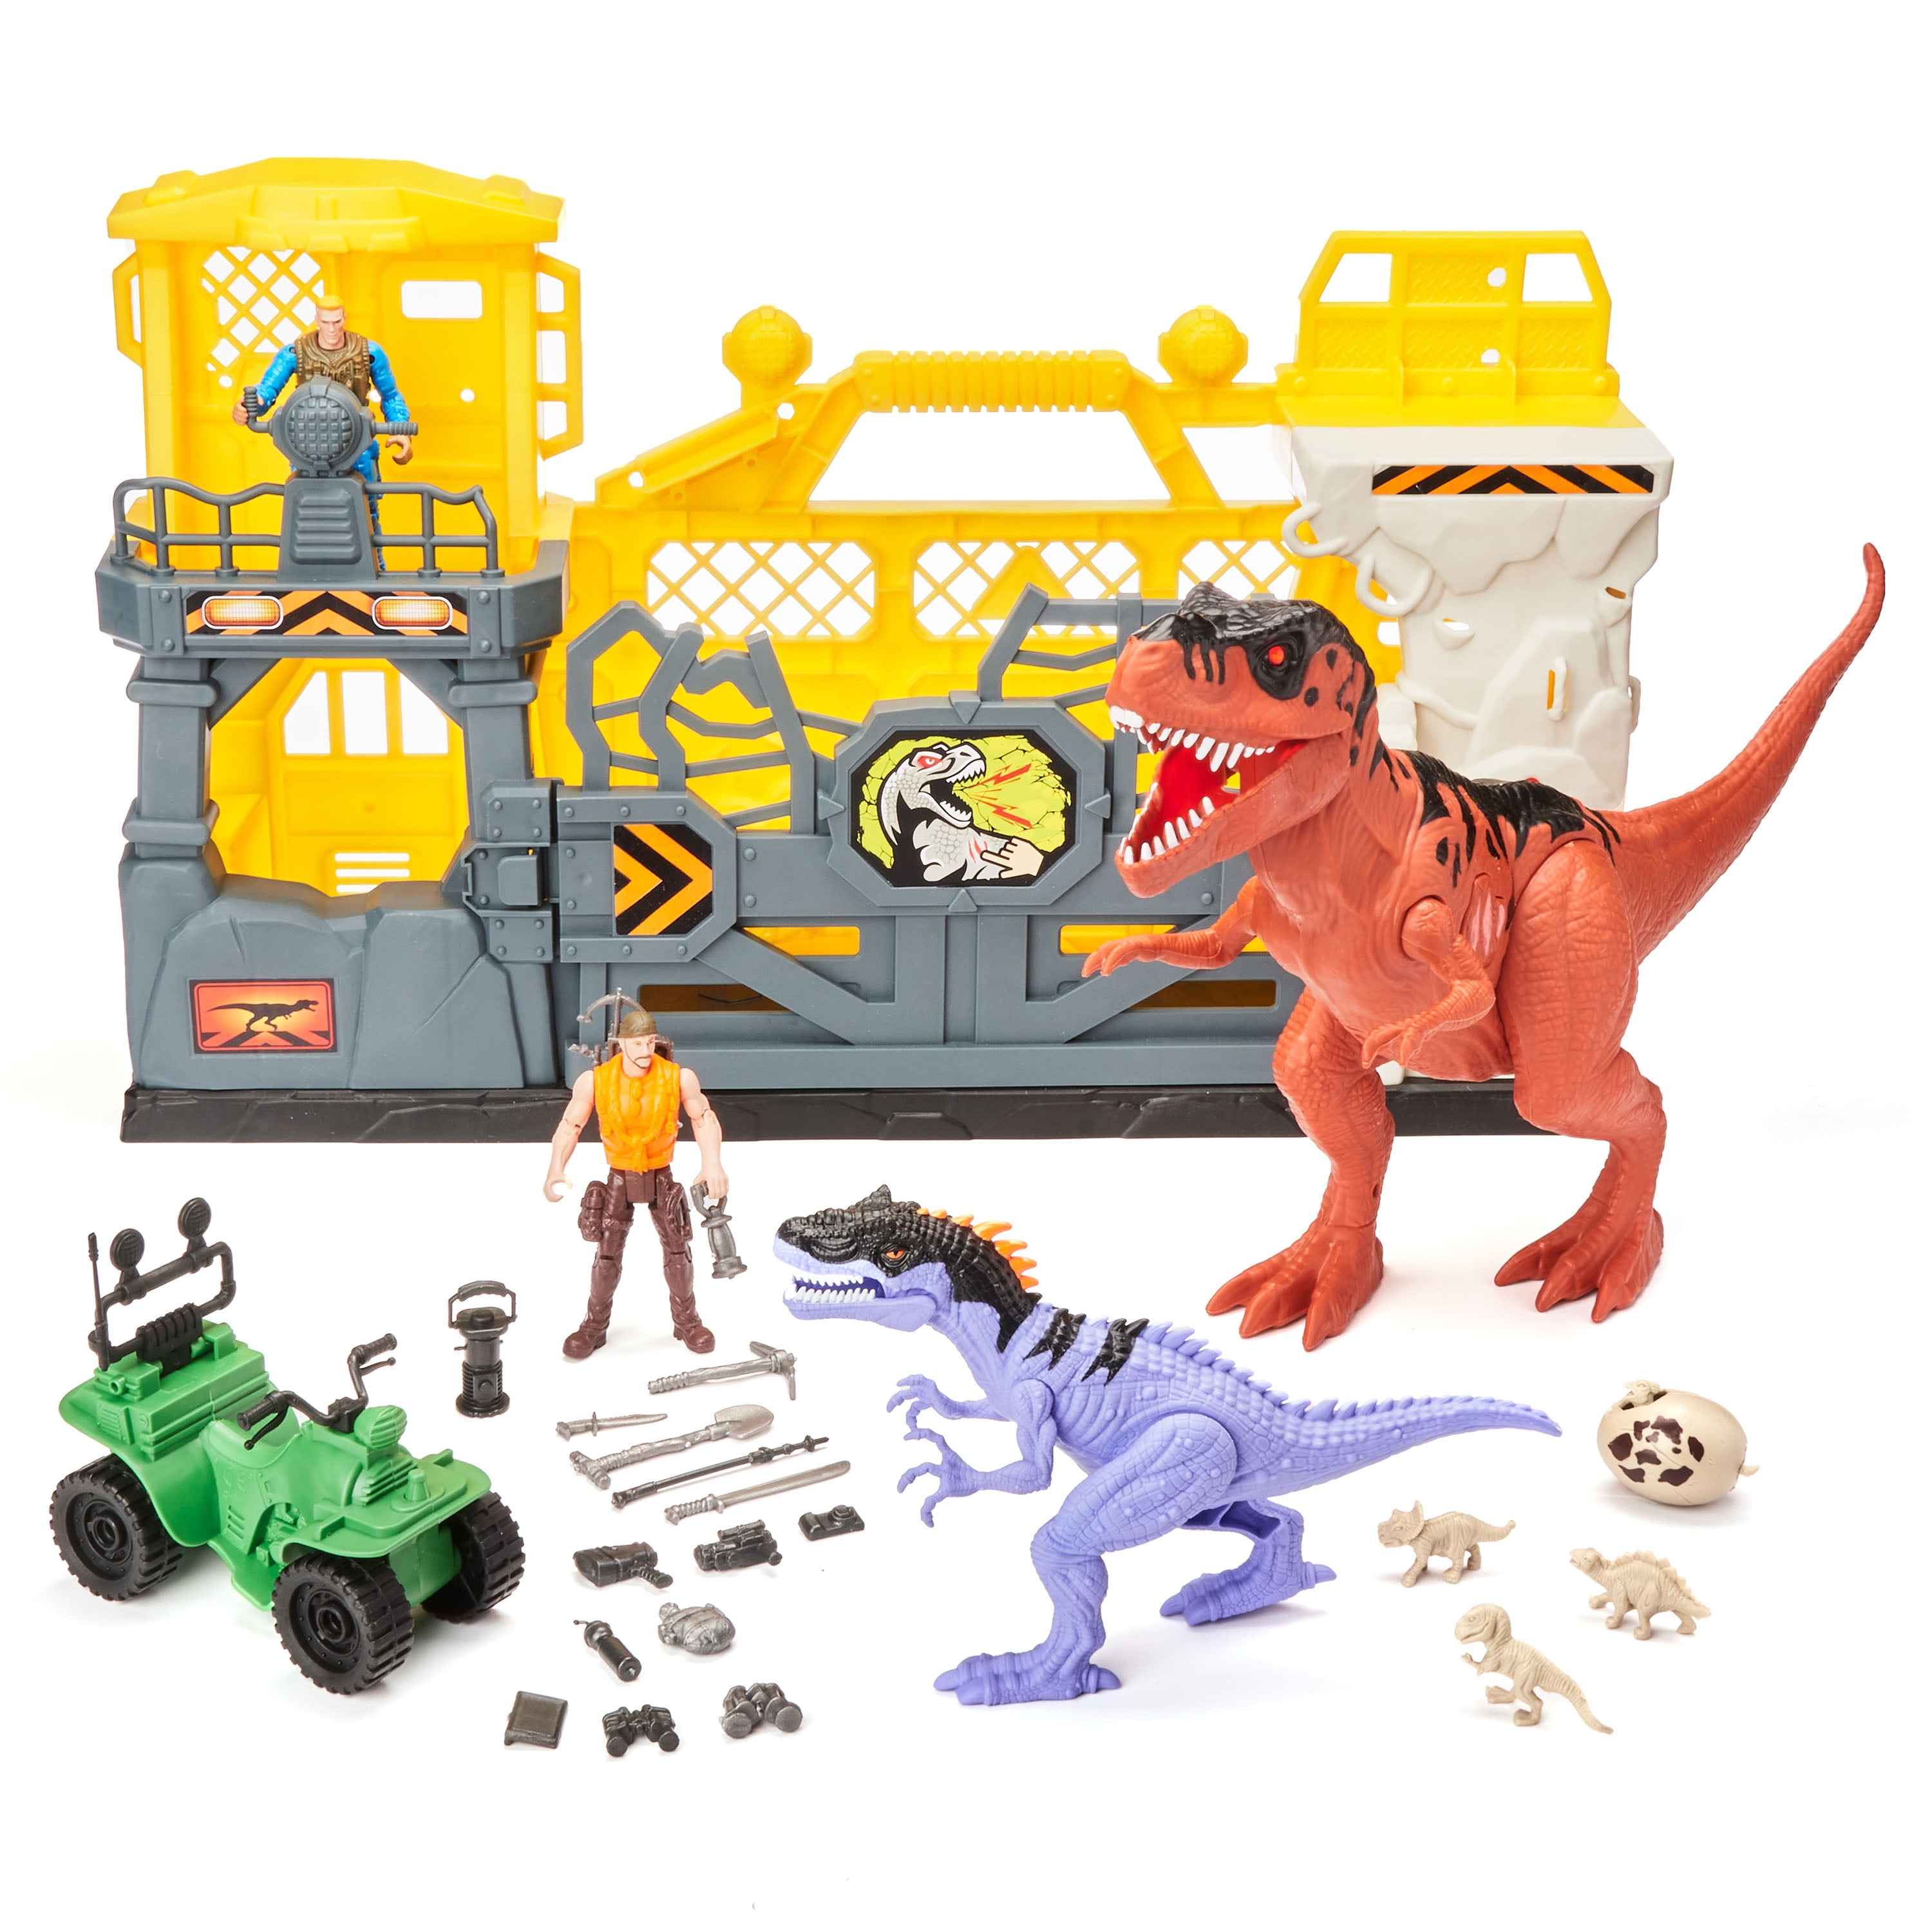 Kid Connection Dinosaur Mega Play Set 